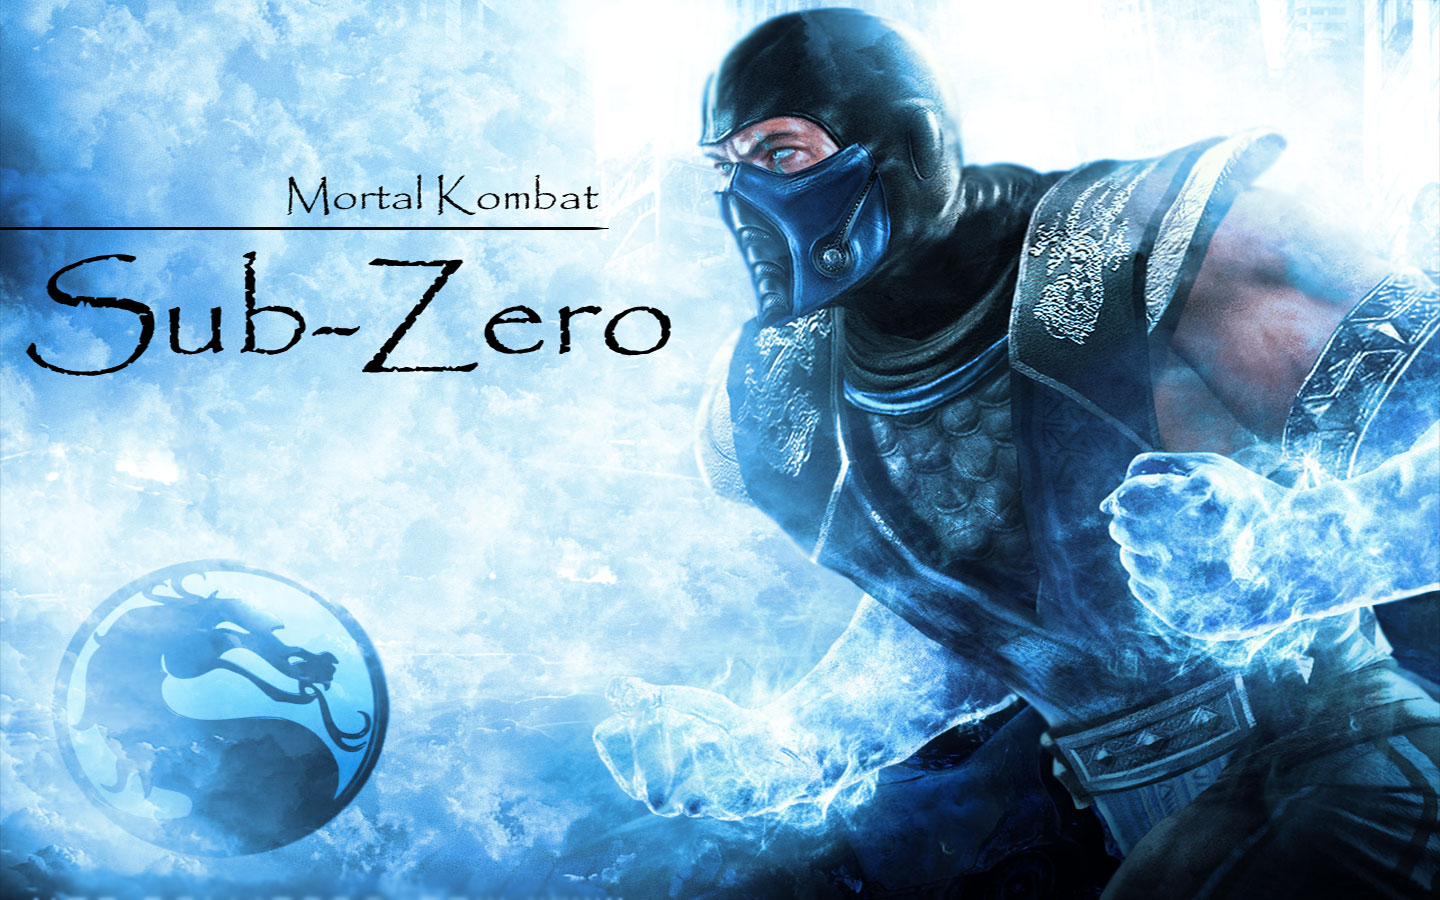 mortal kombat, video game, sub zero (mortal kombat)